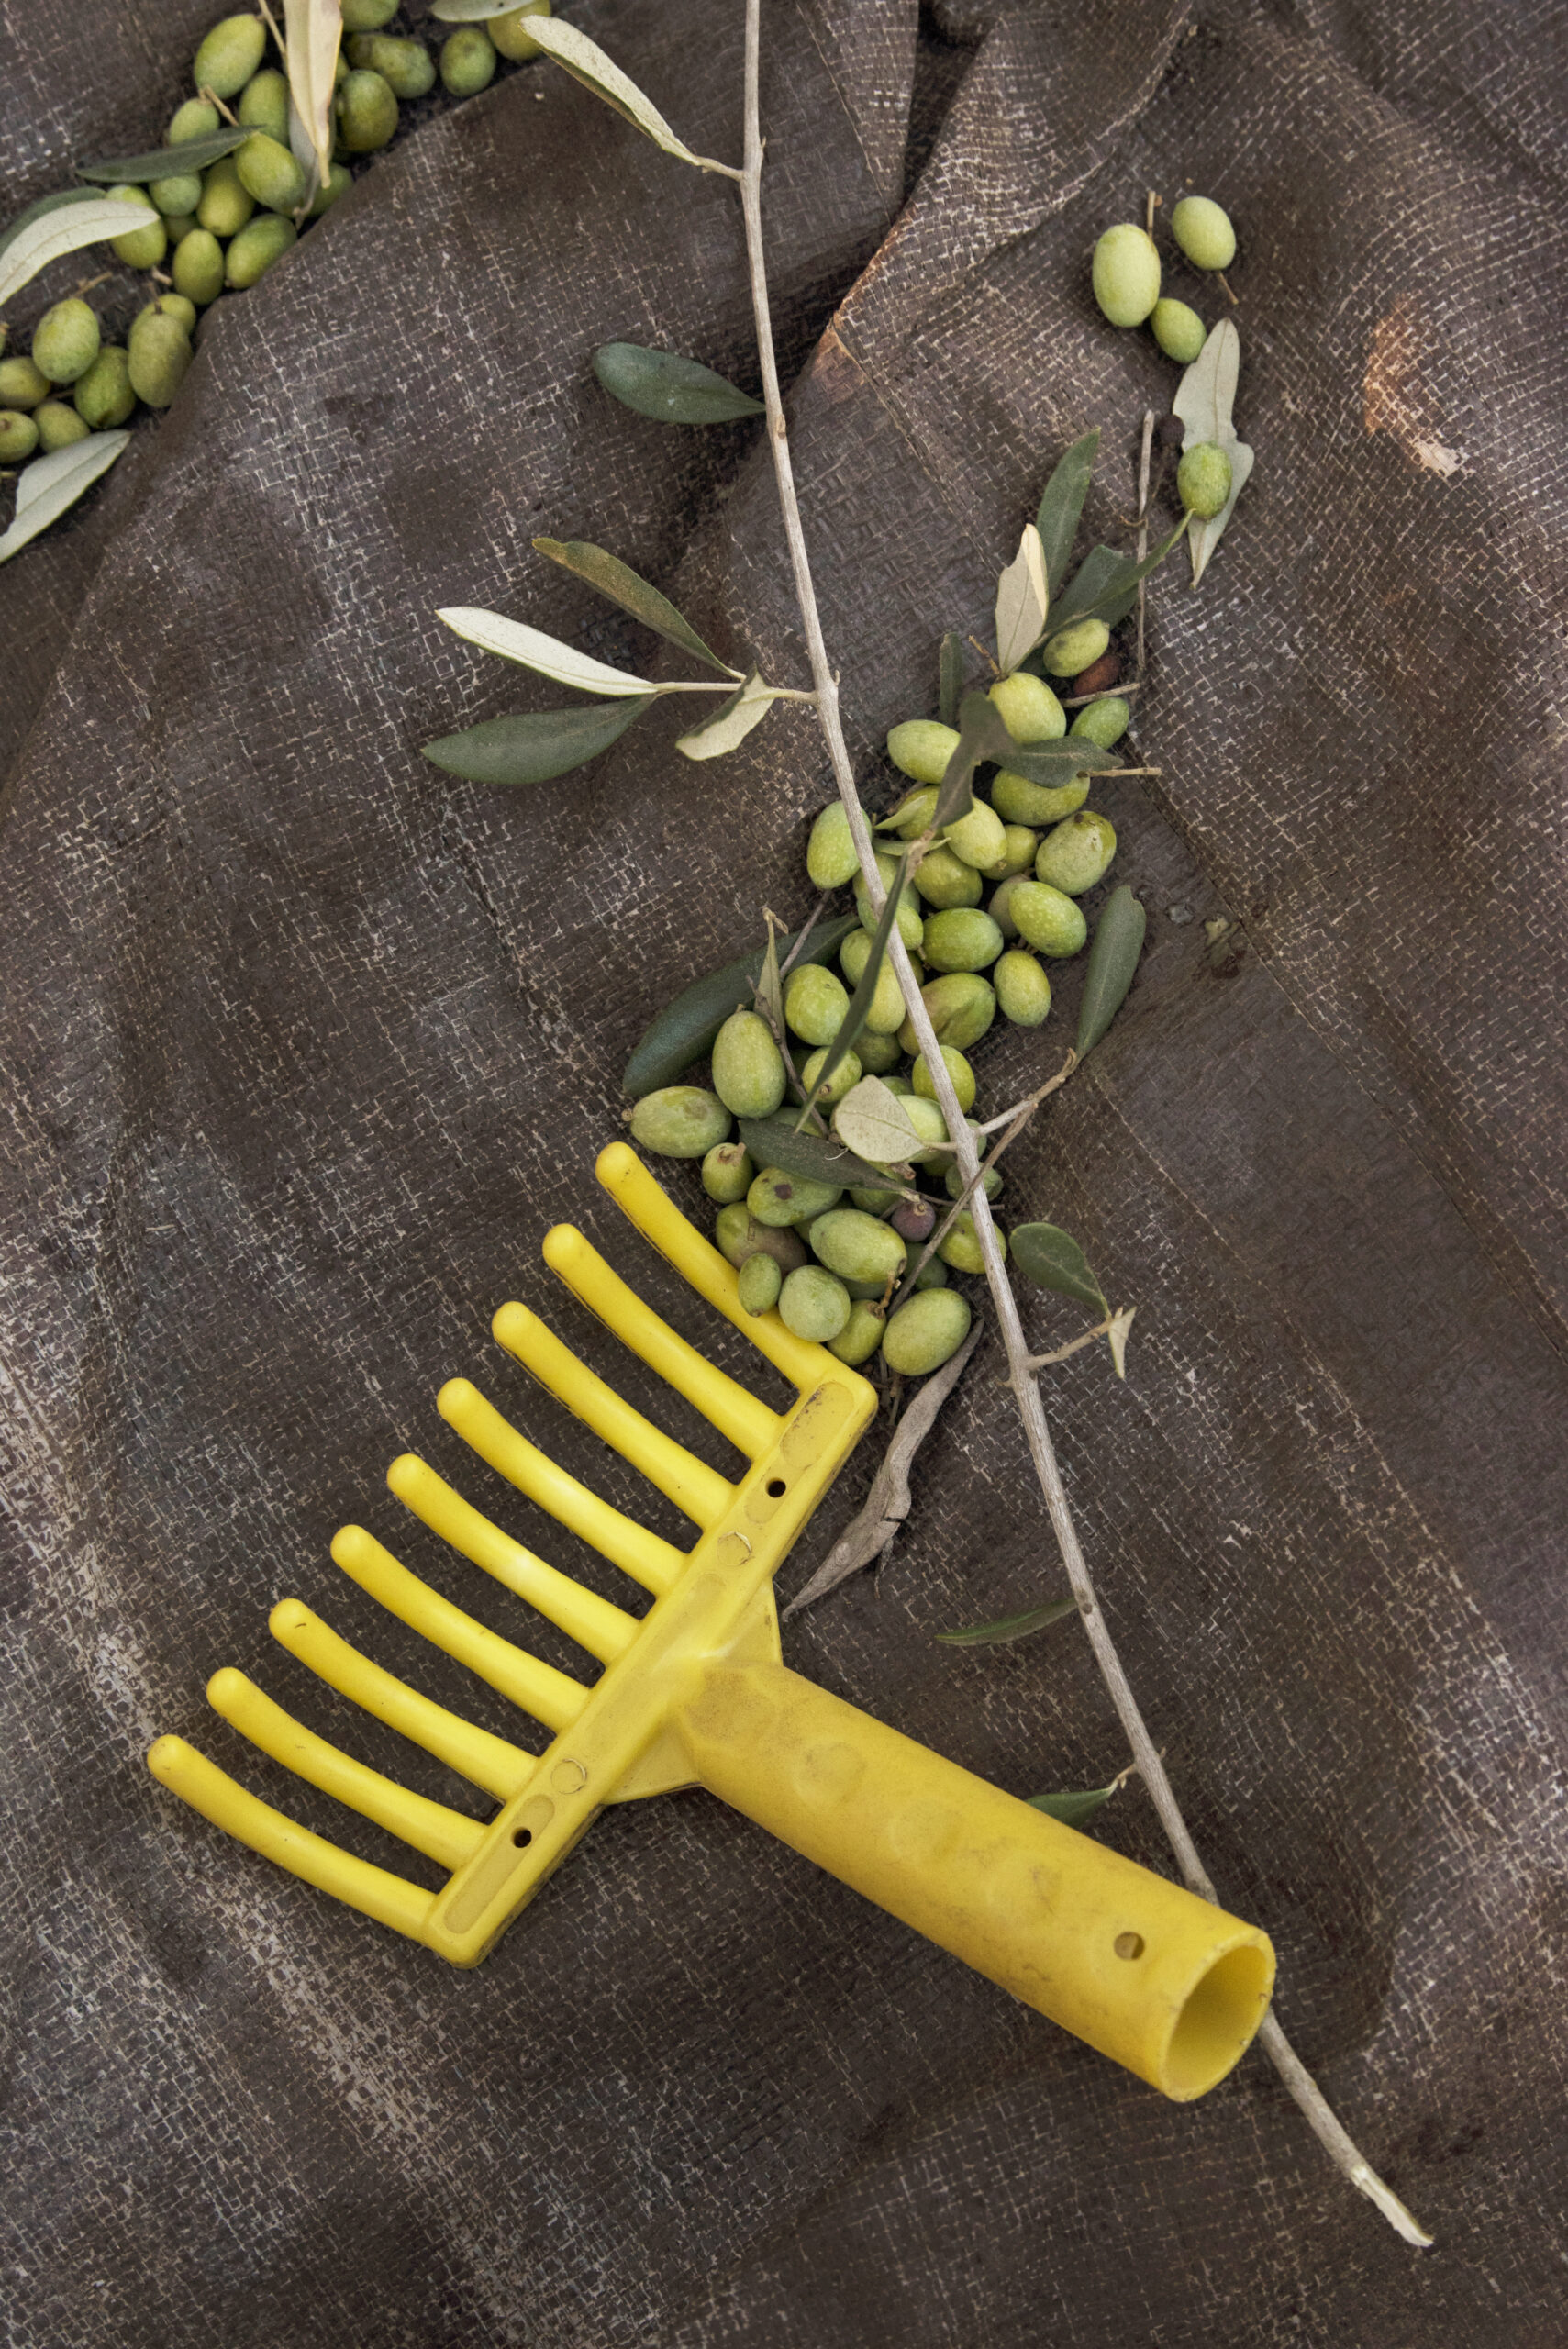 The small plastic rakes used to pick olives during olive harvest at Baker Lane Vineyards in Sebastopol, California, November 8, 2018. (Photo: Erik Castro/for Sonoma Magazine)